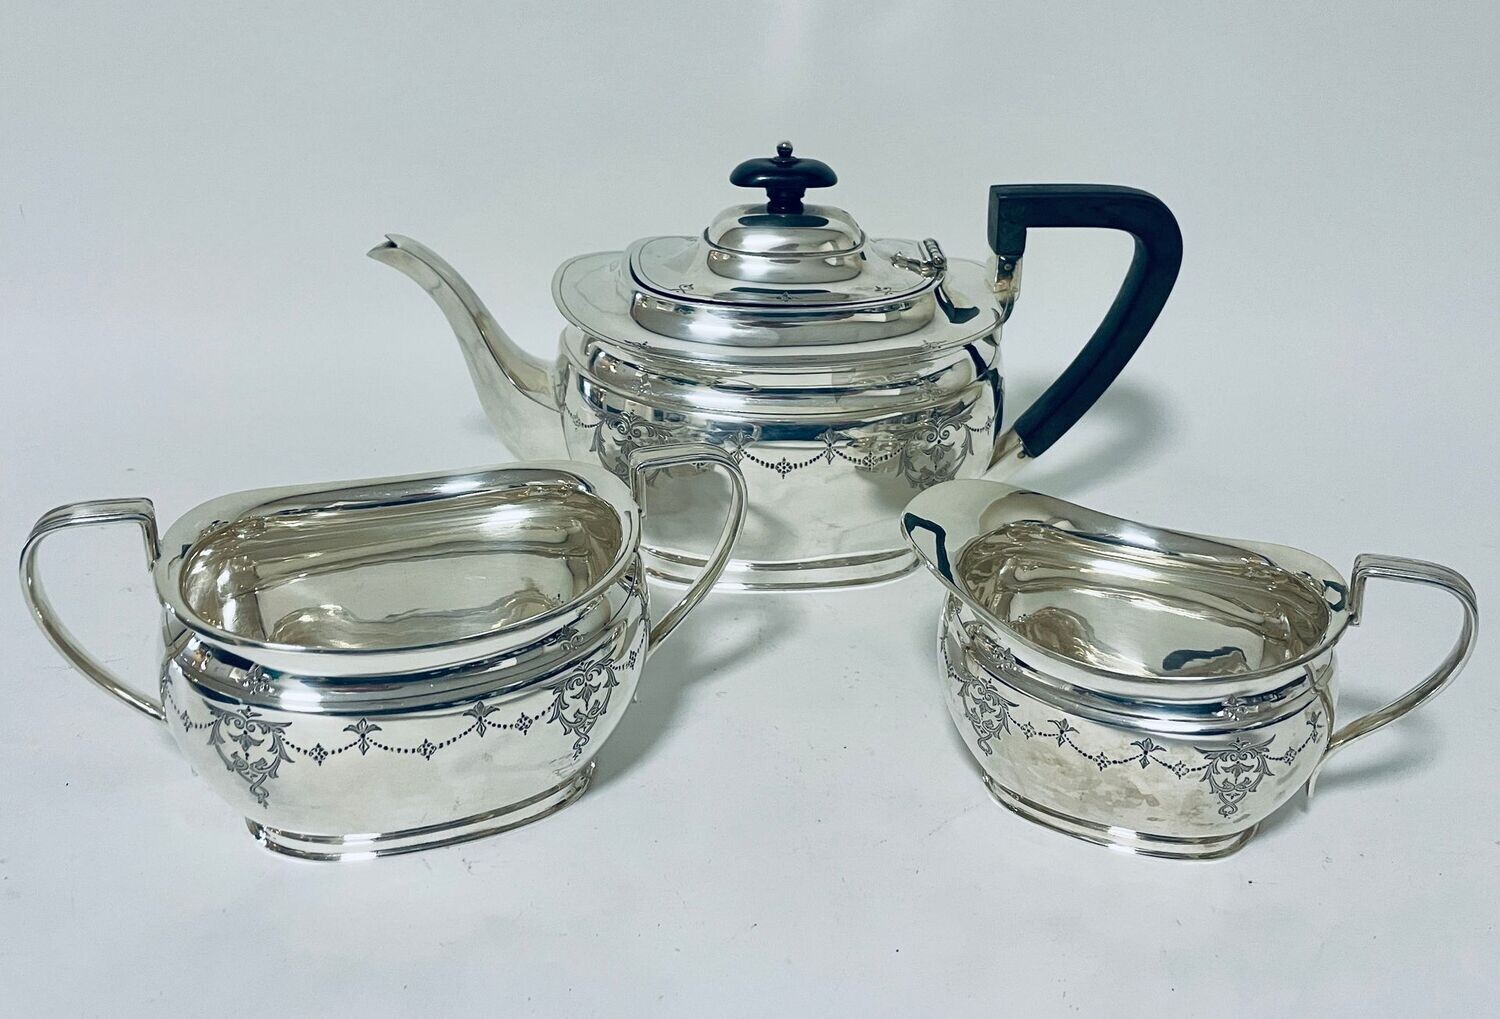 Antique Three Piece Silver Tea Set